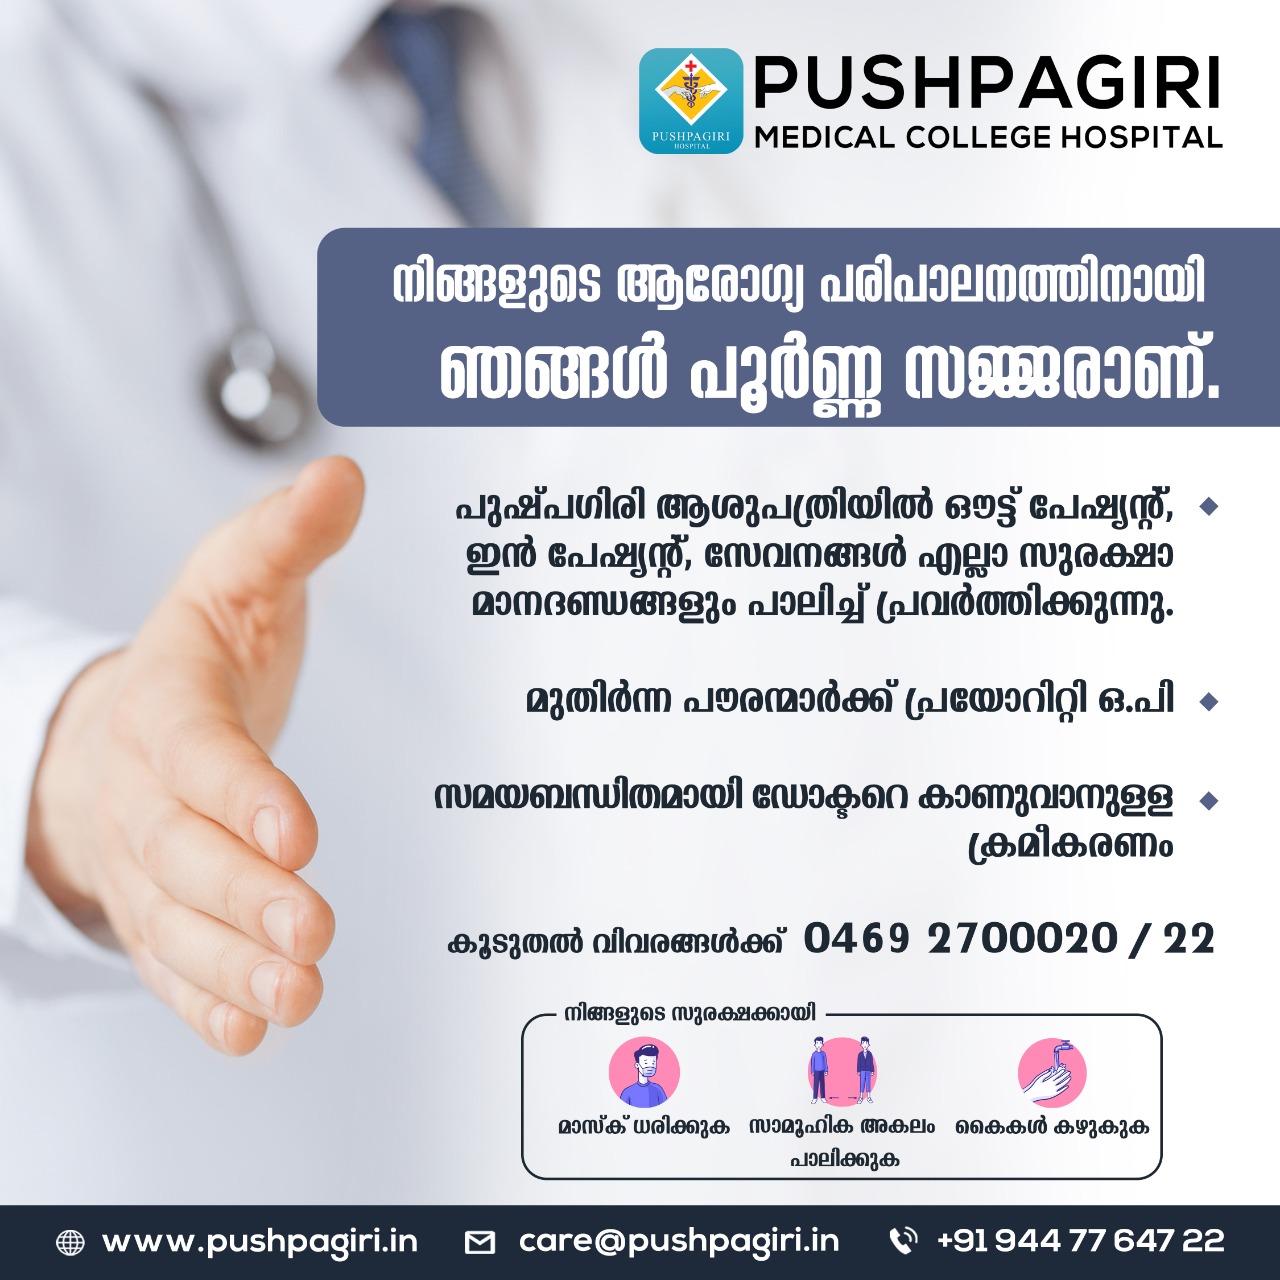 Pushpagiri Medical College Hospital